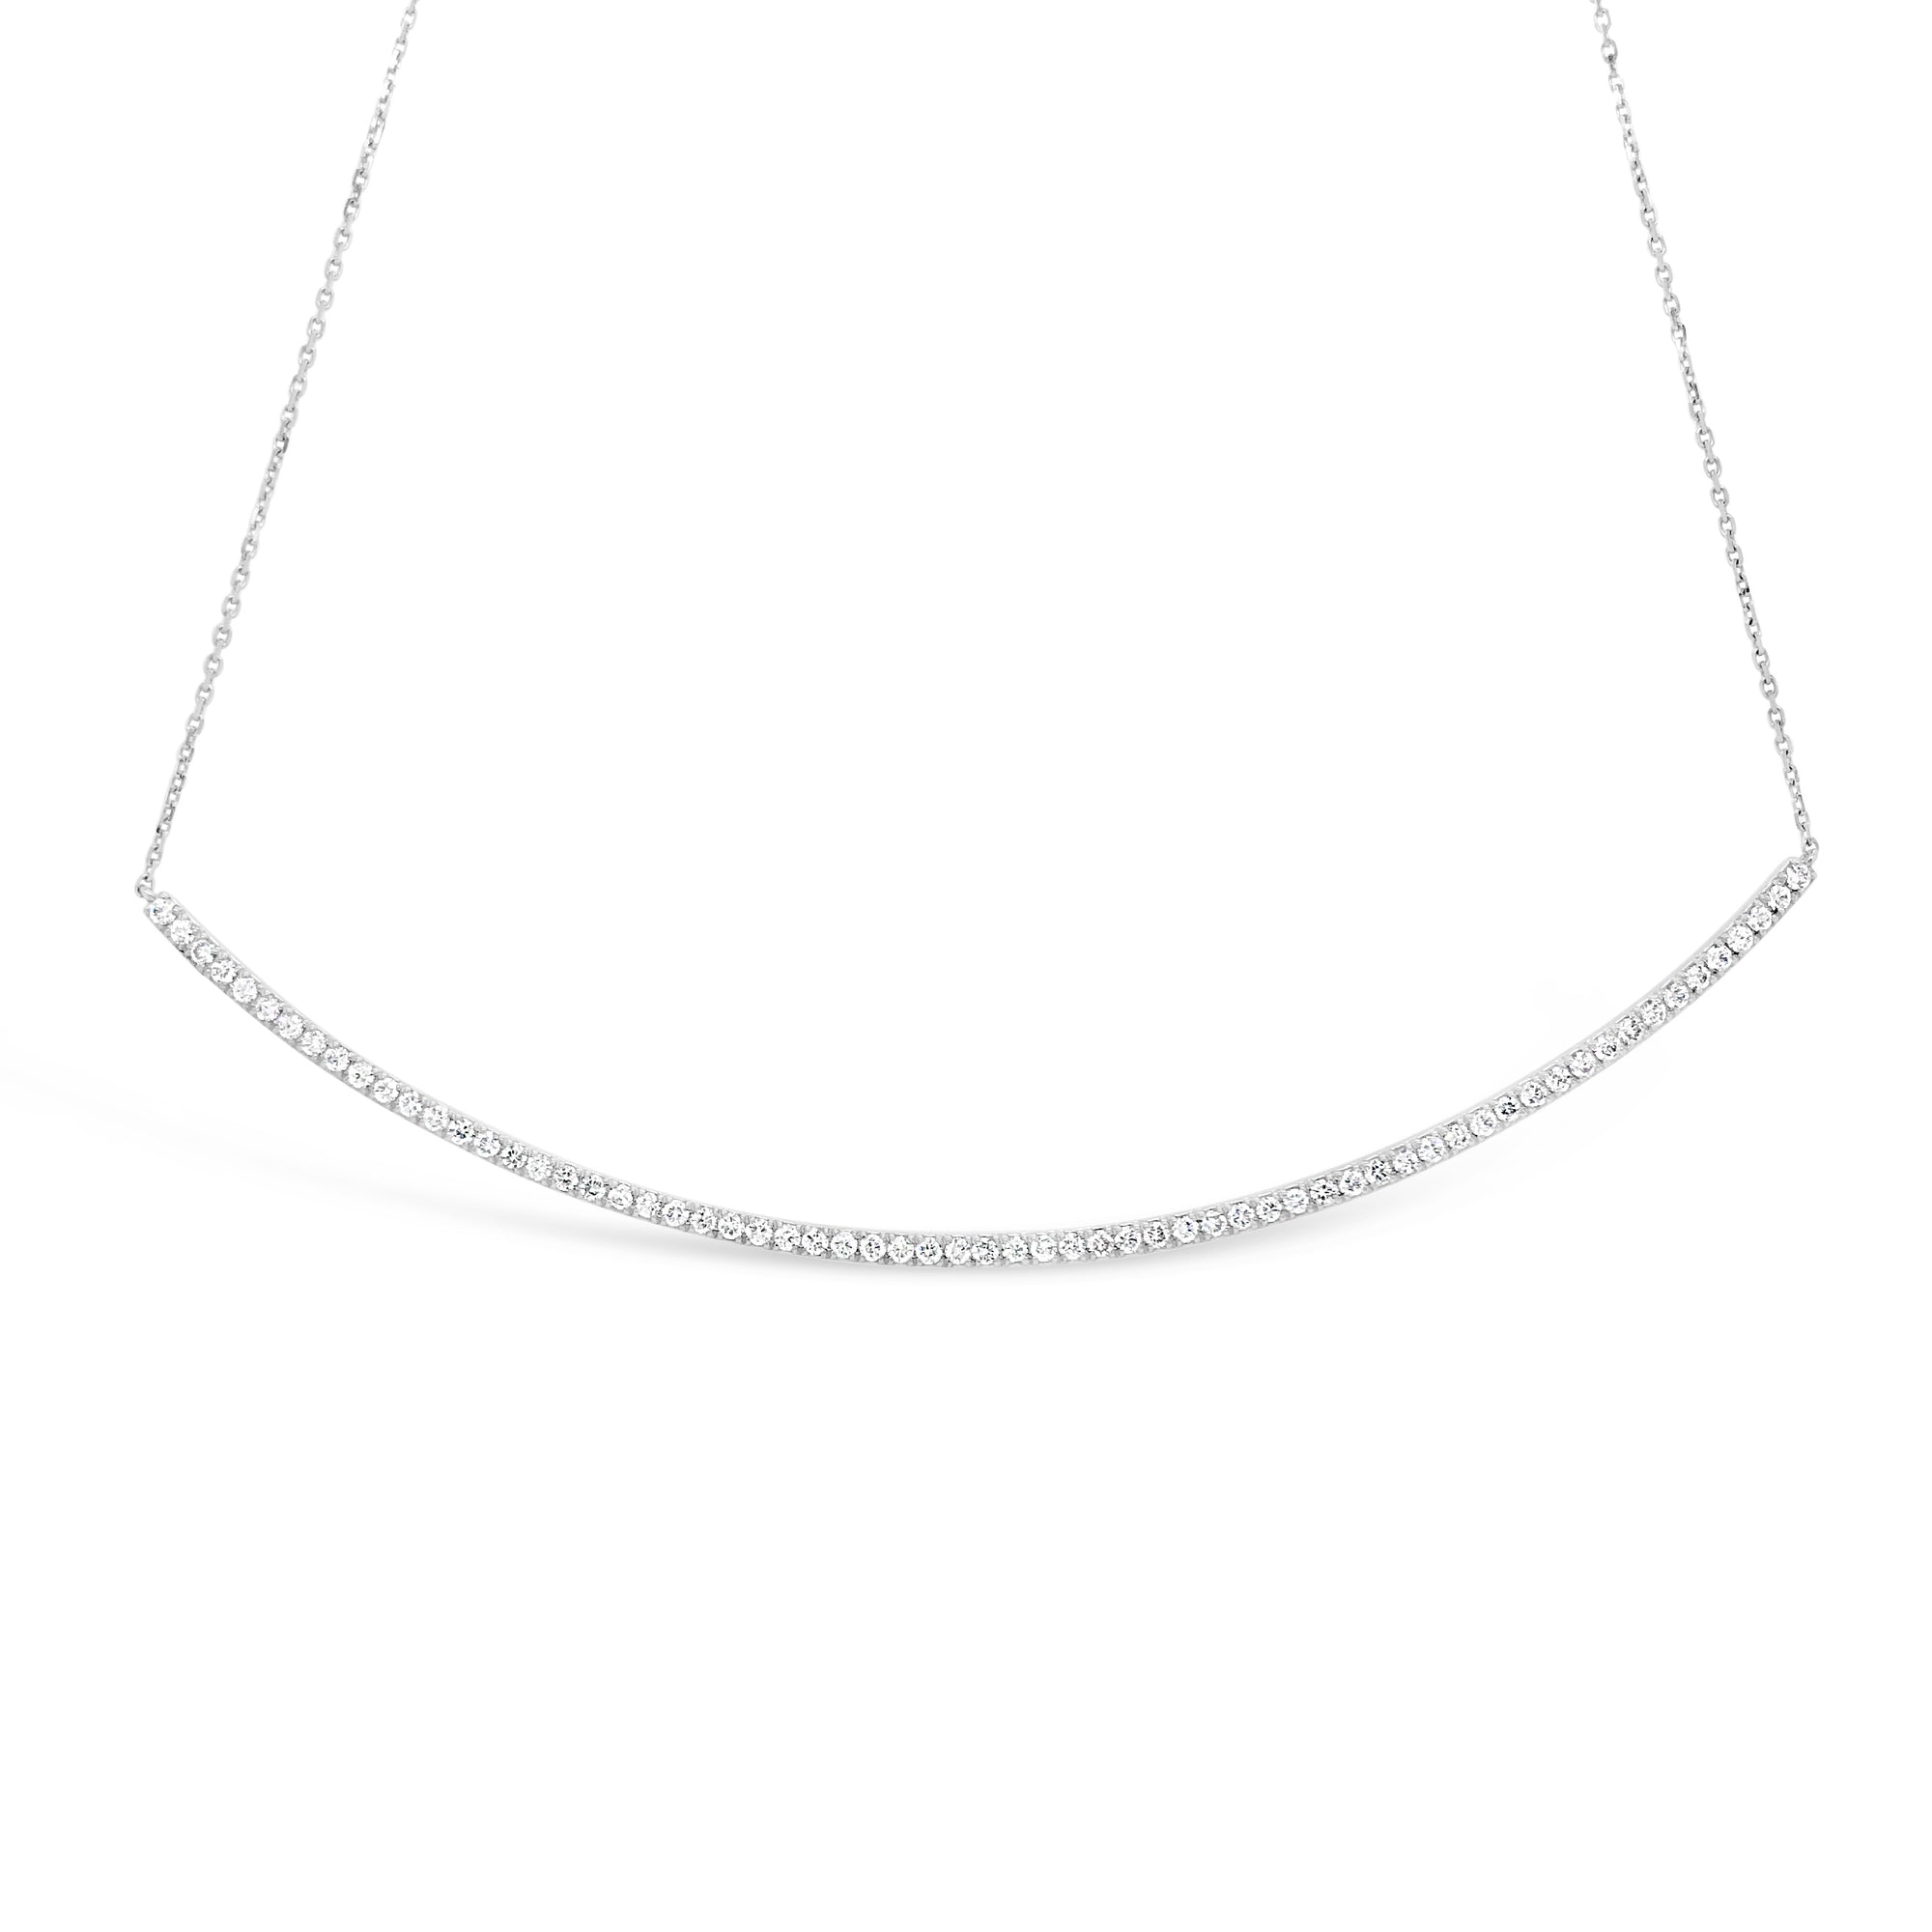 4" Diamond Bar Necklace -14K white gold weighing 5.0 grams -65 round diamonds totaling 1.11 carats